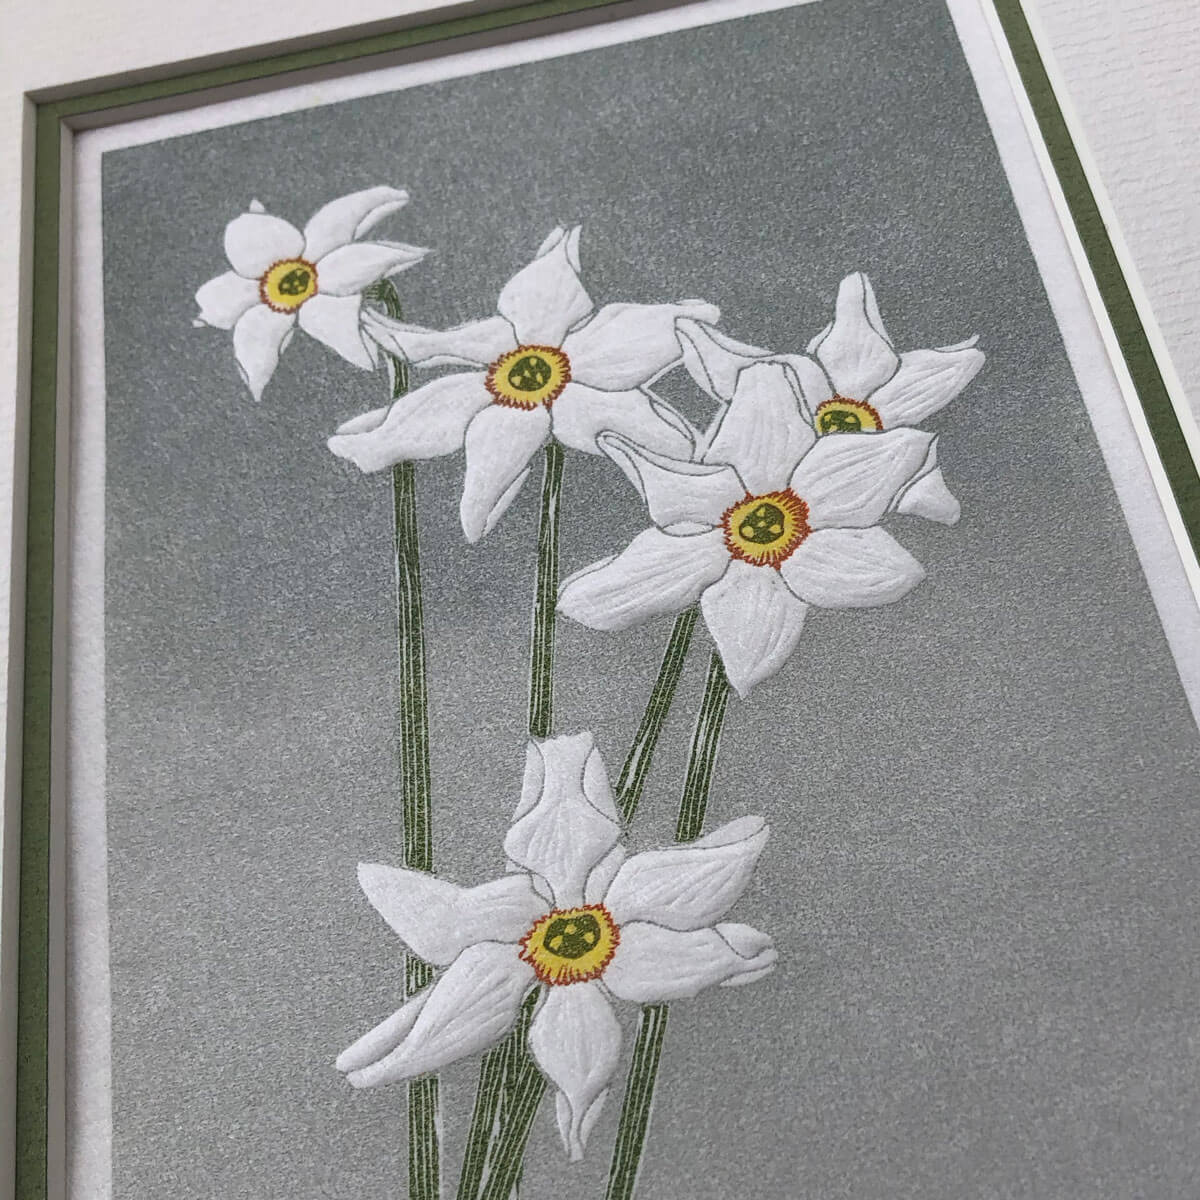 handmade linocut print of white narcissus poeticus flowers against graded grey background